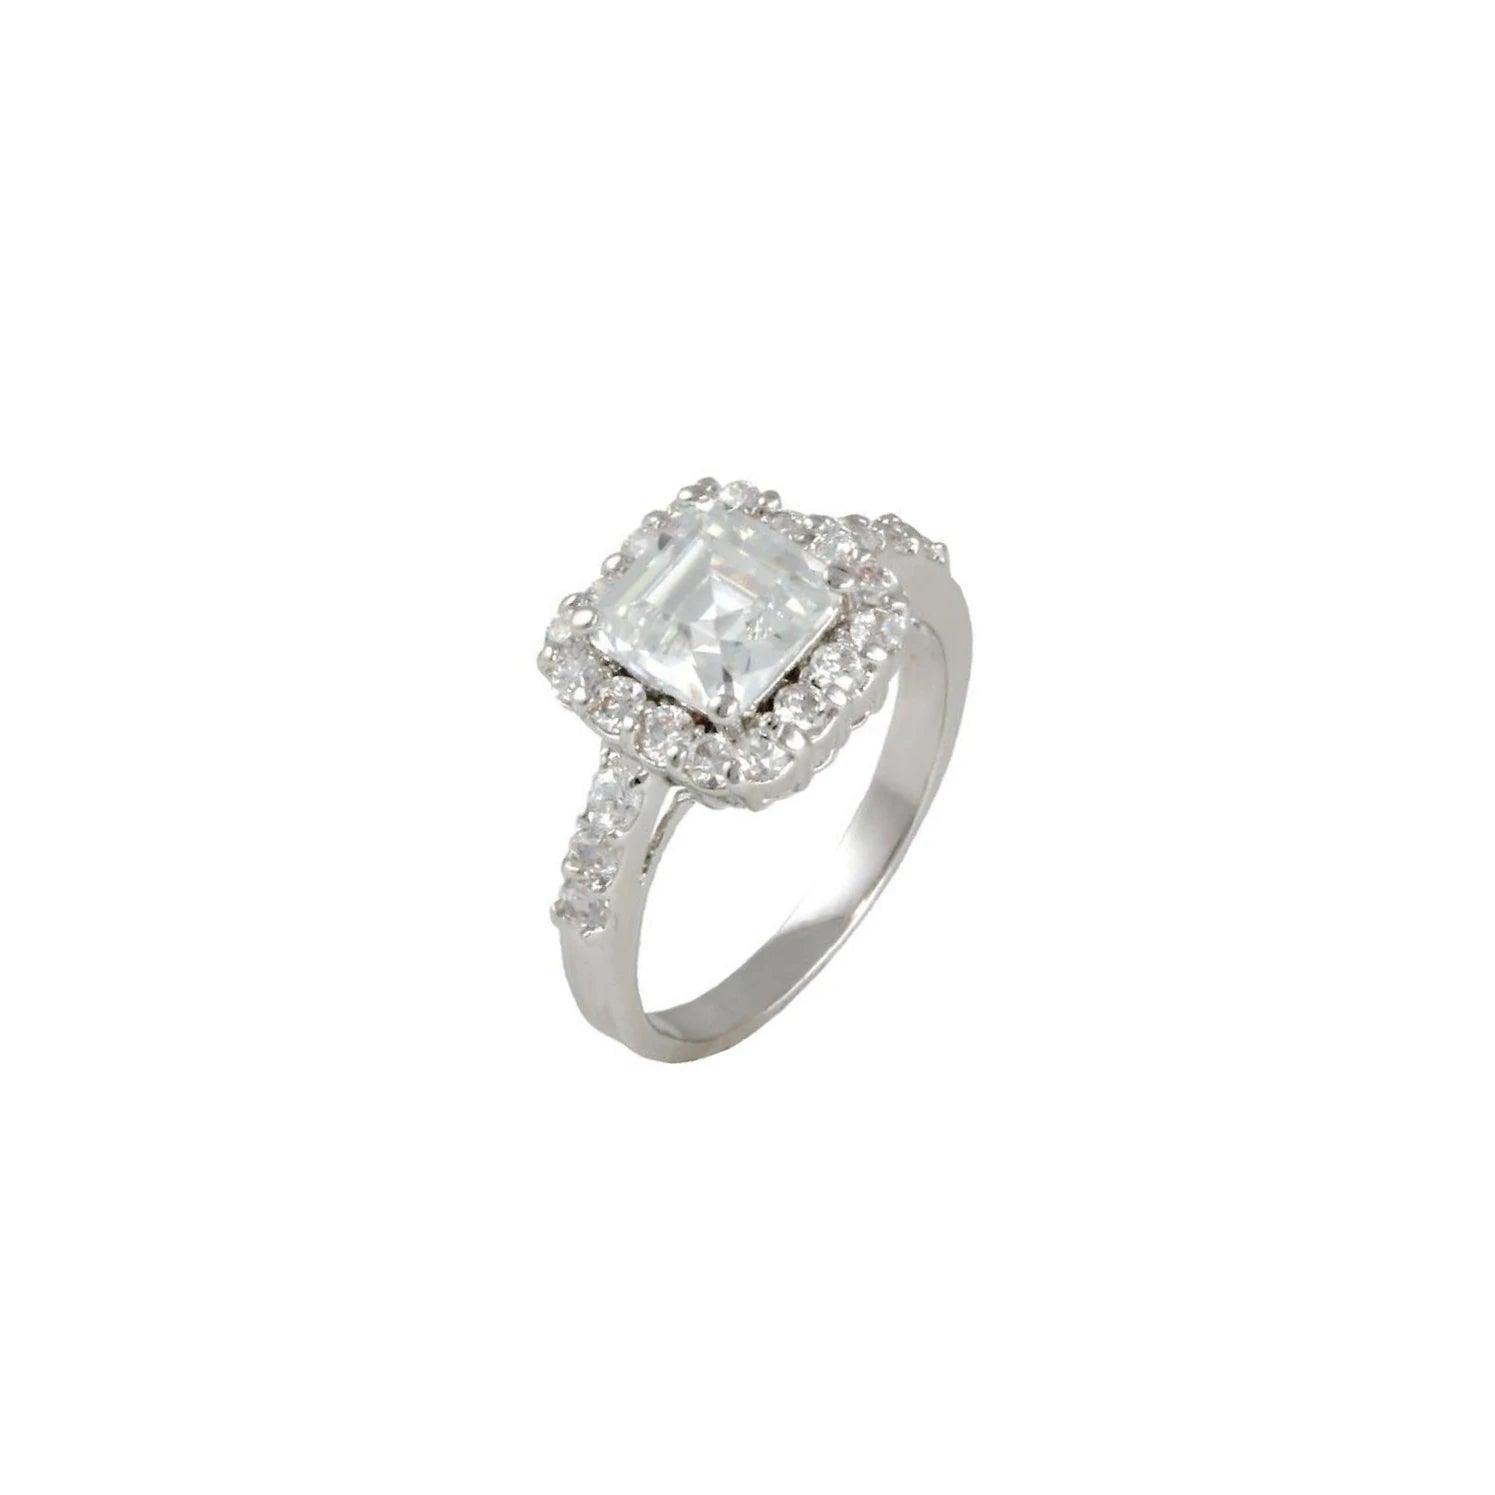 Maria 2 Ct. Cushion Cut CZ Diamond Ring, Silver - Zahra Jewelry